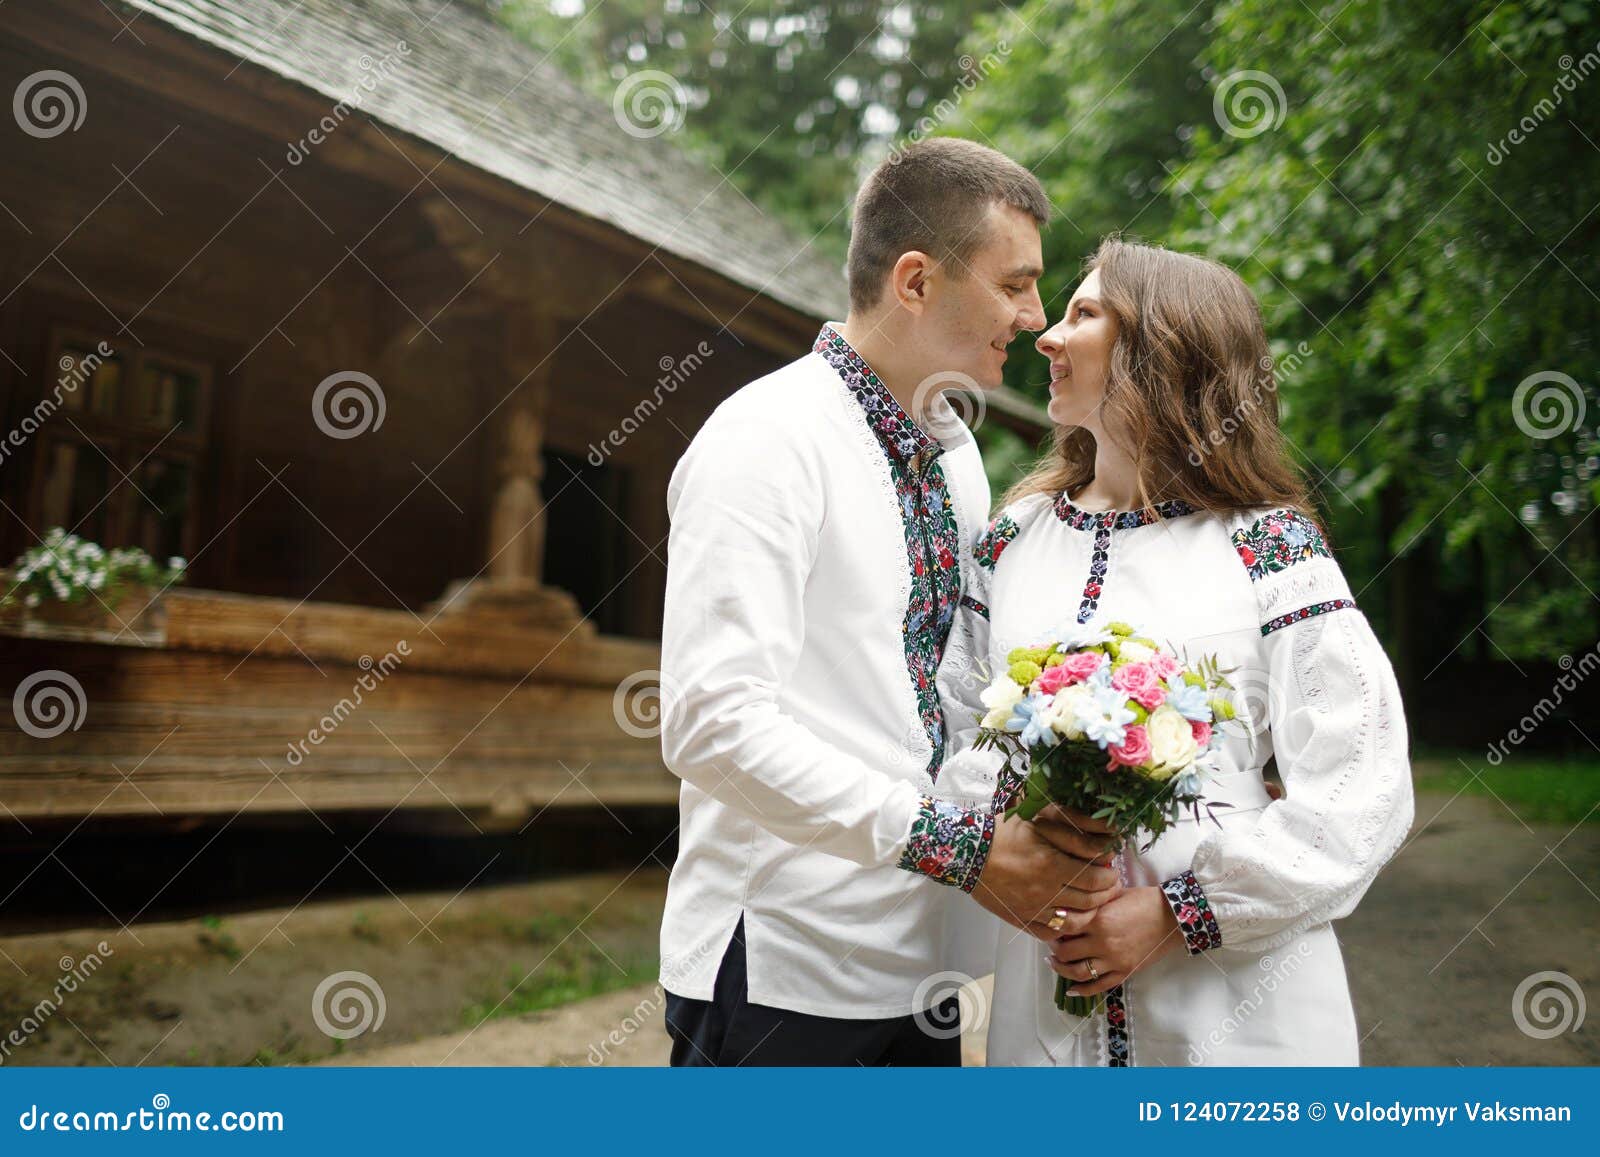 https://thumbs.dreamstime.com/z/beautiful-bride-groom-ukrainian-style-standing-w-lovely-couple-ukrainian-national-costumes-outdoors-ethnic-124072258.jpg